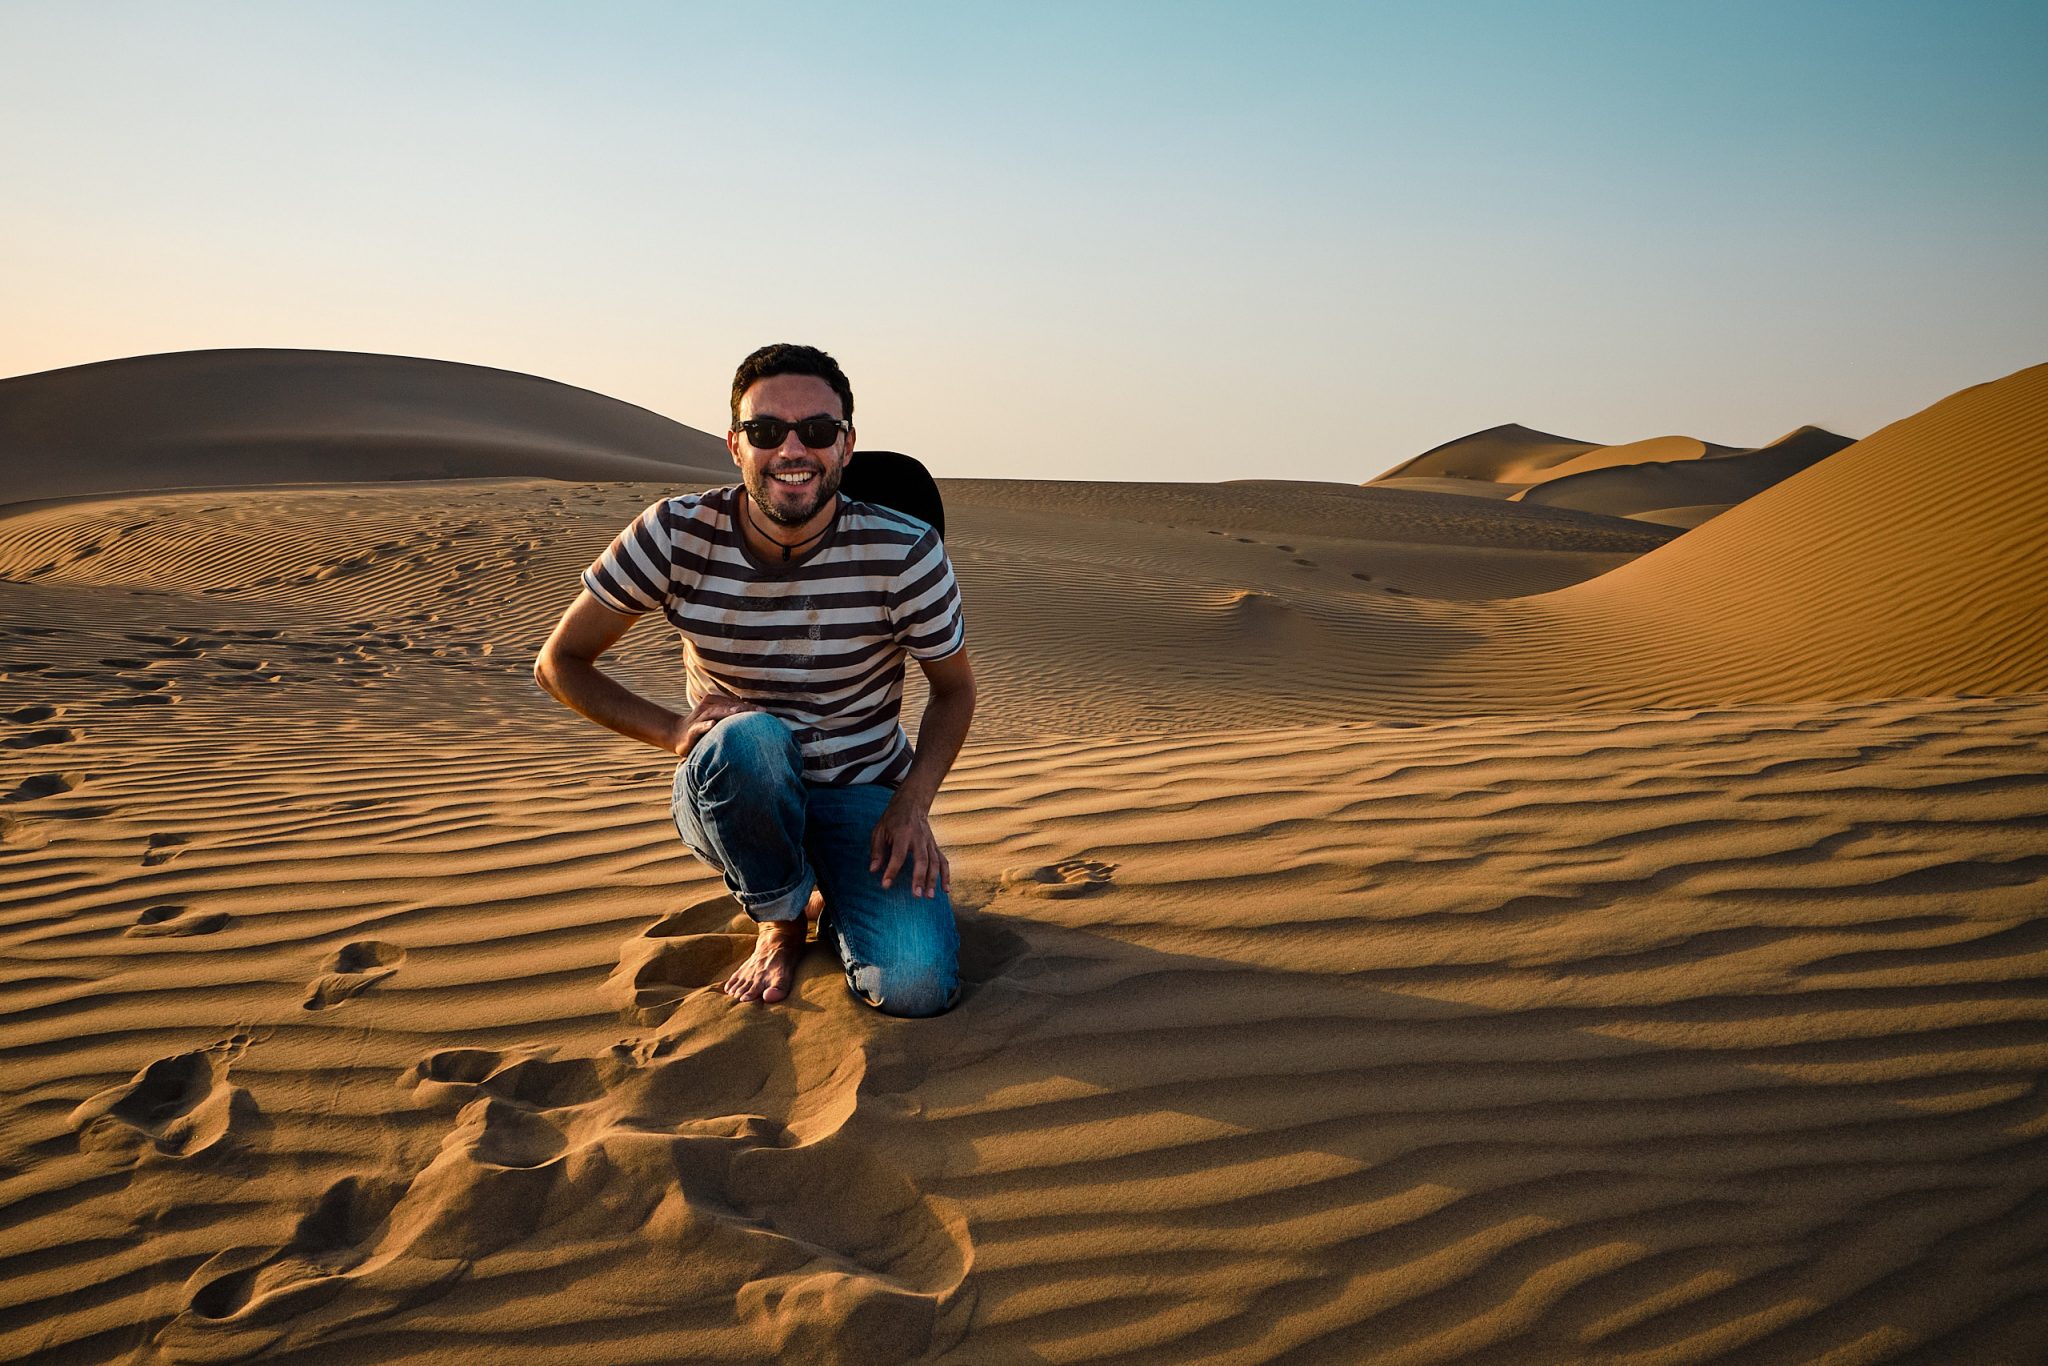 About João Gomes. Iran's desert. ©João Gomes